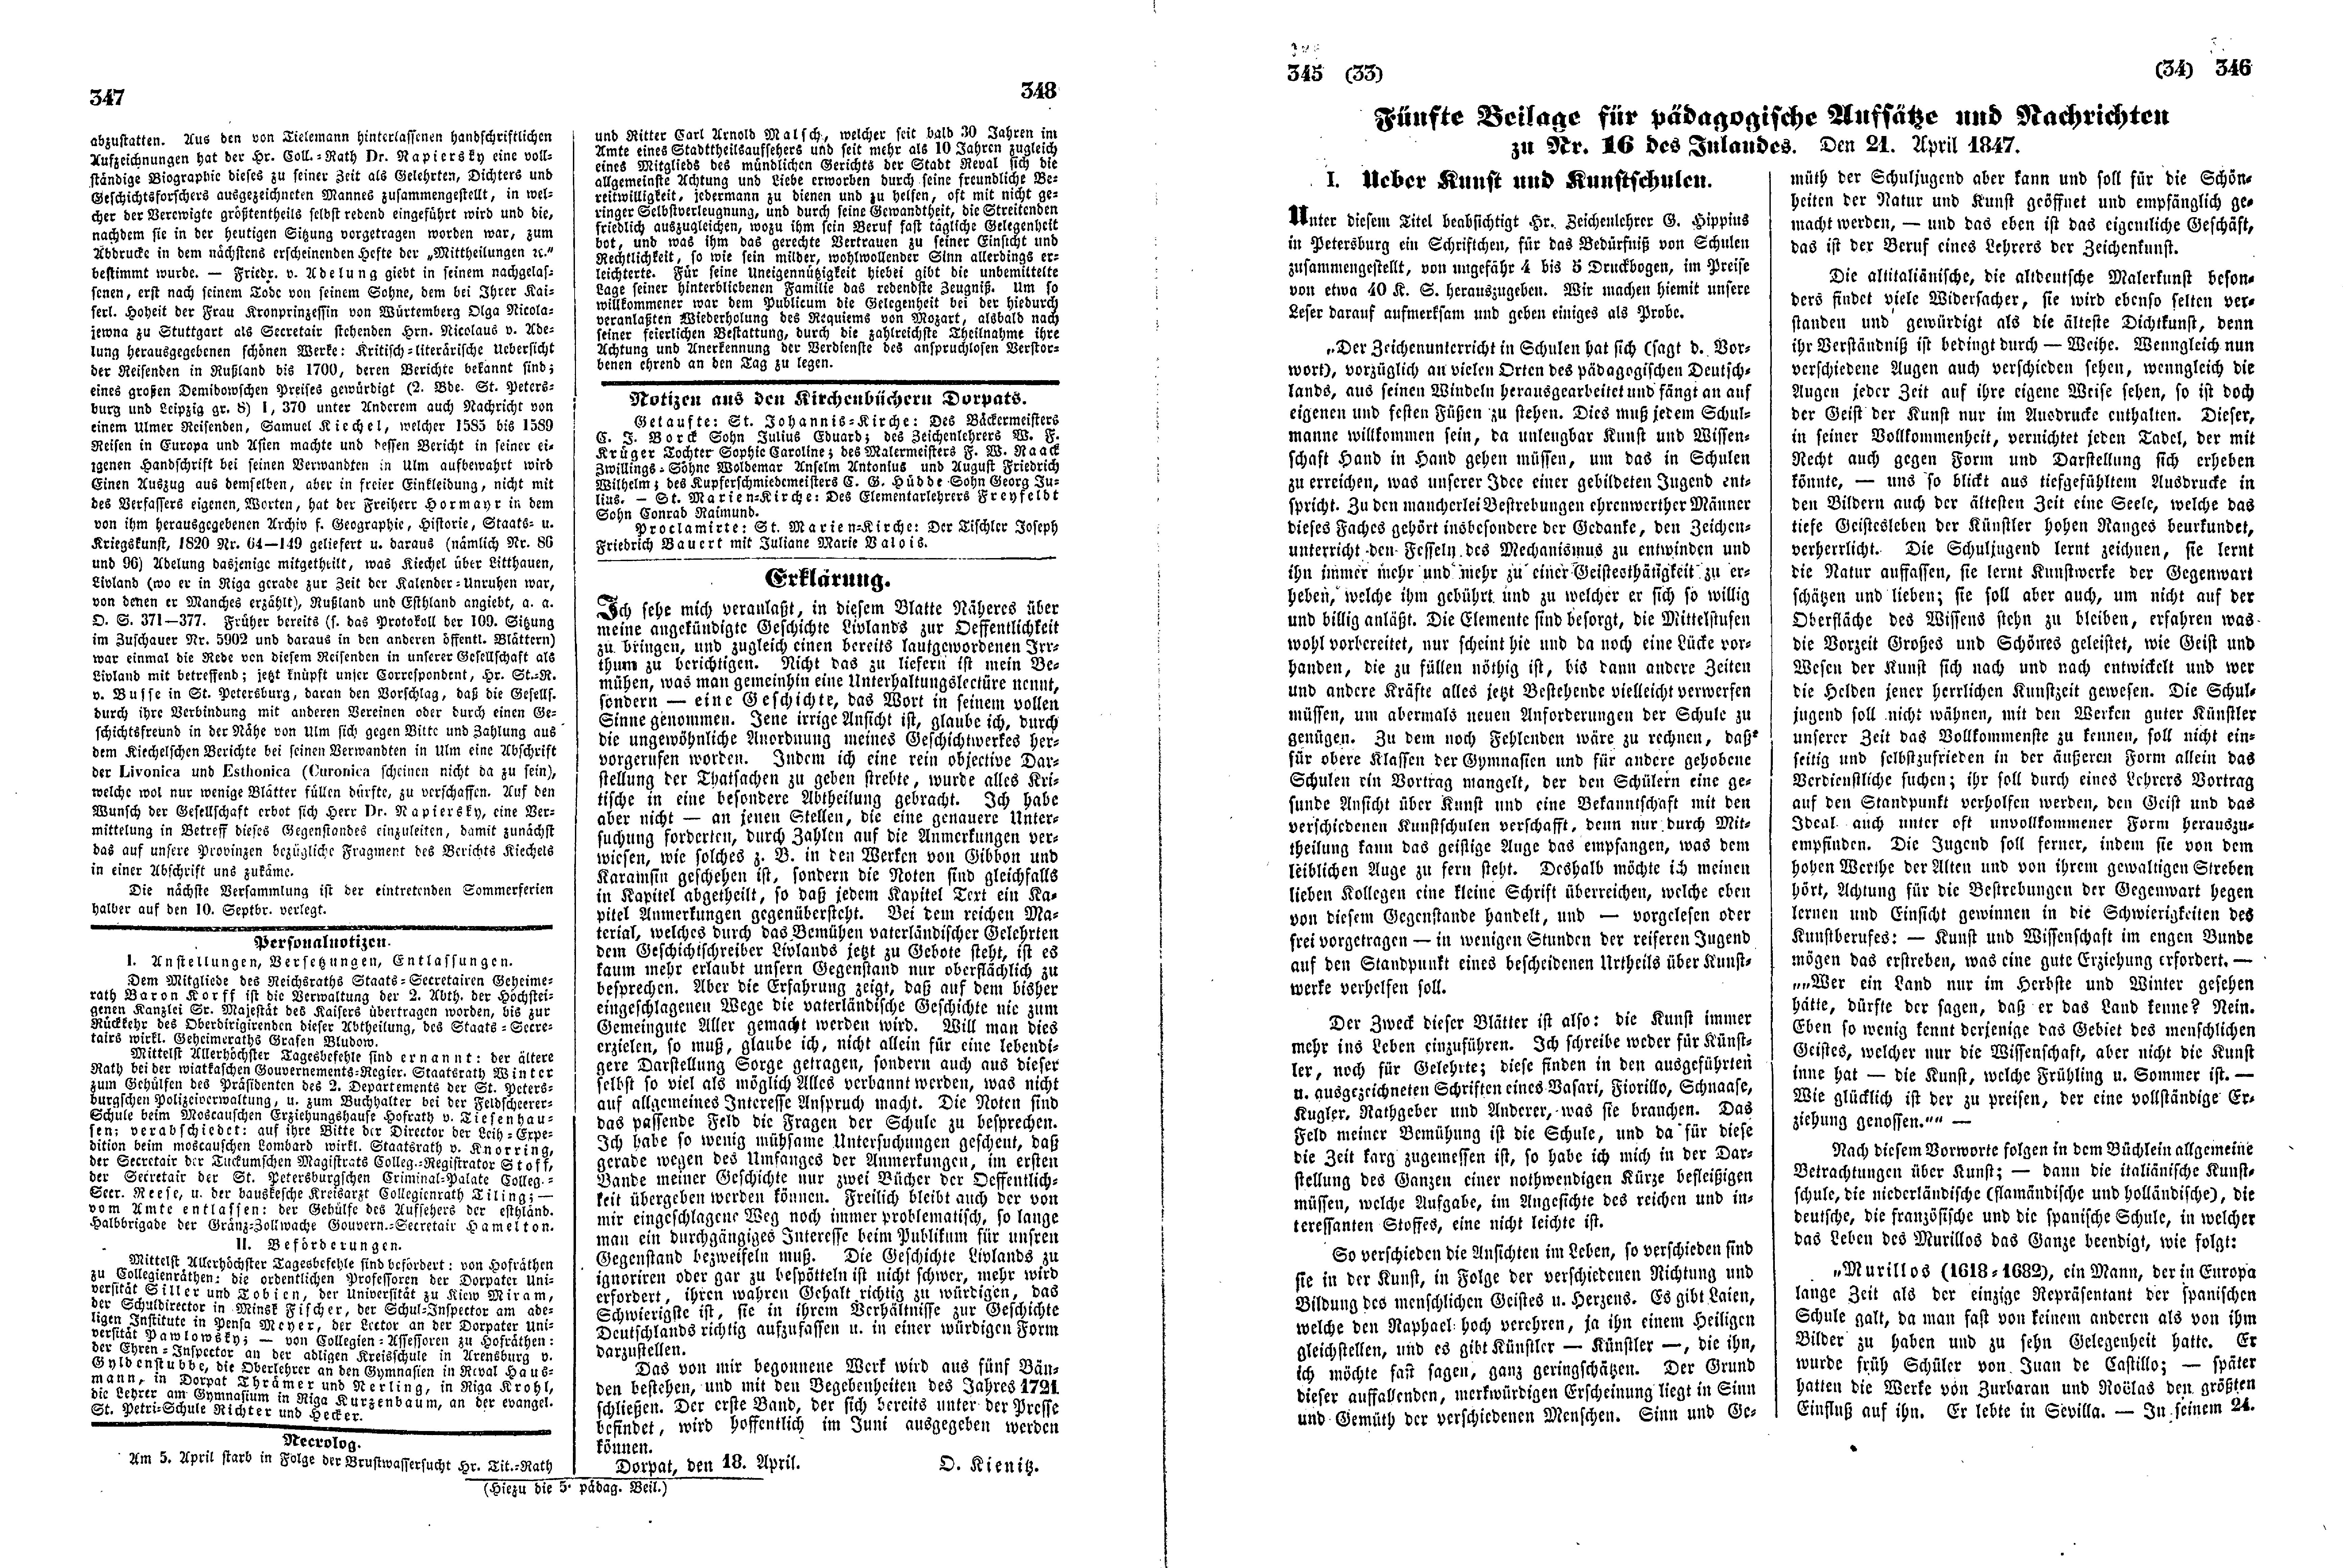 Das Inland [12] (1847) | 92. (347-346) Main body of text